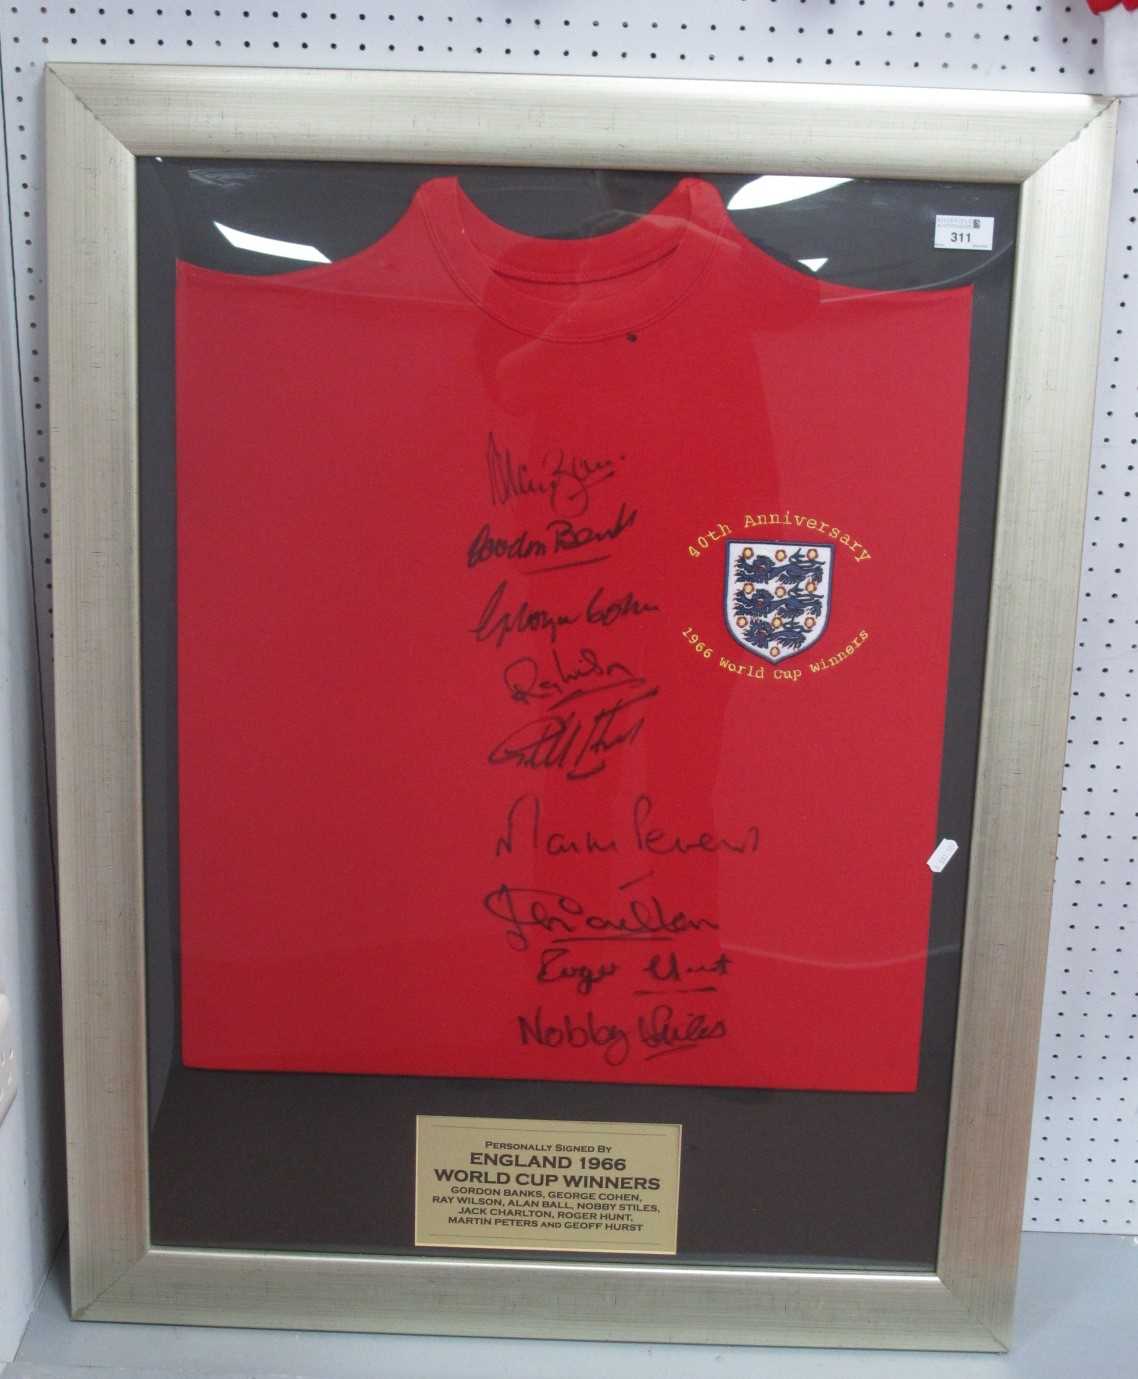 1966 World Cup England Player Autographs - Banks, Cohen, Wilson, Ball, Stiles, Jack Charlton,